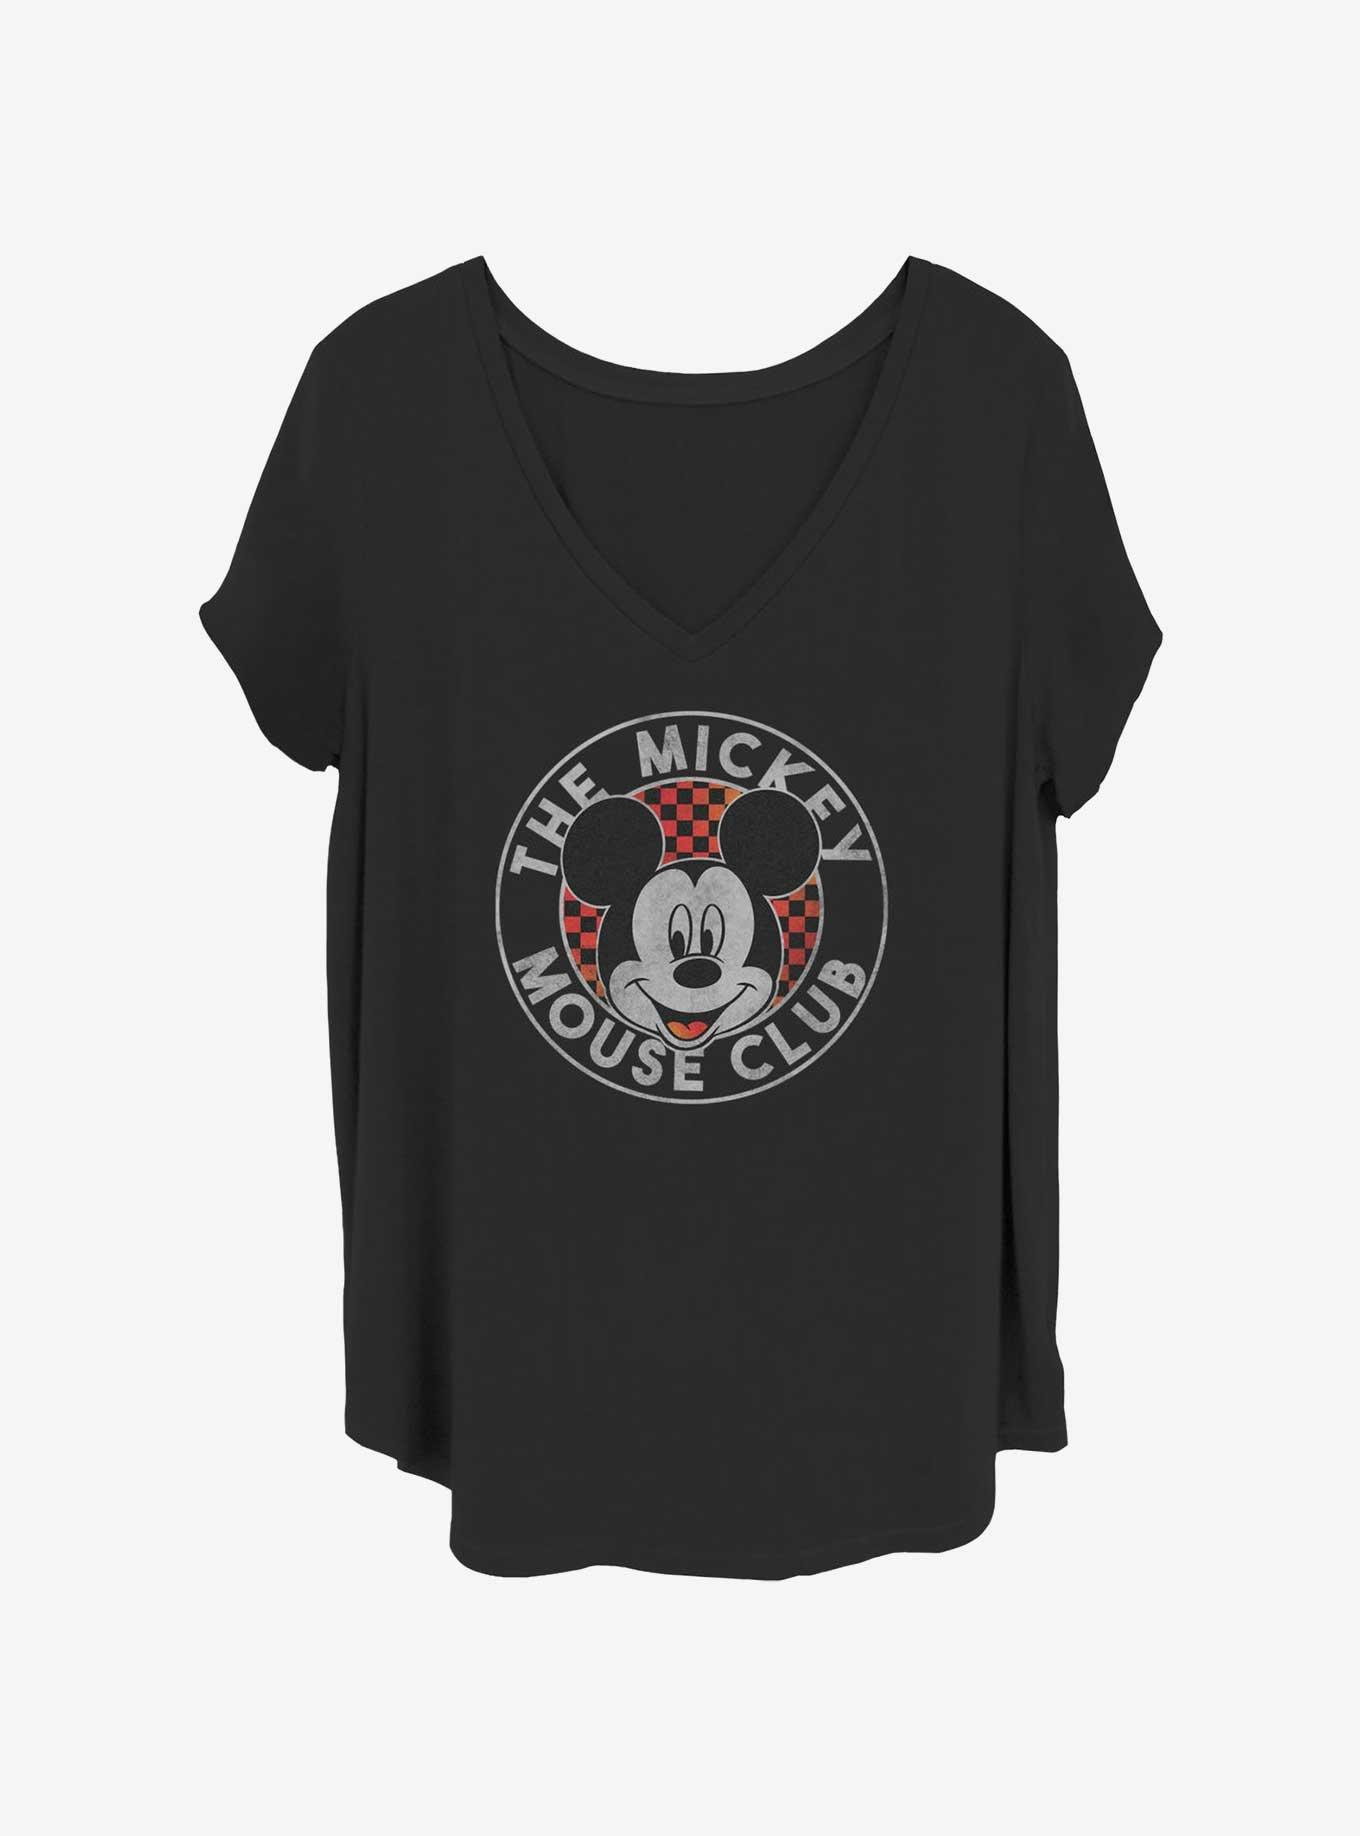 Disney Mickey Mouse Club Girls T-Shirt Plus